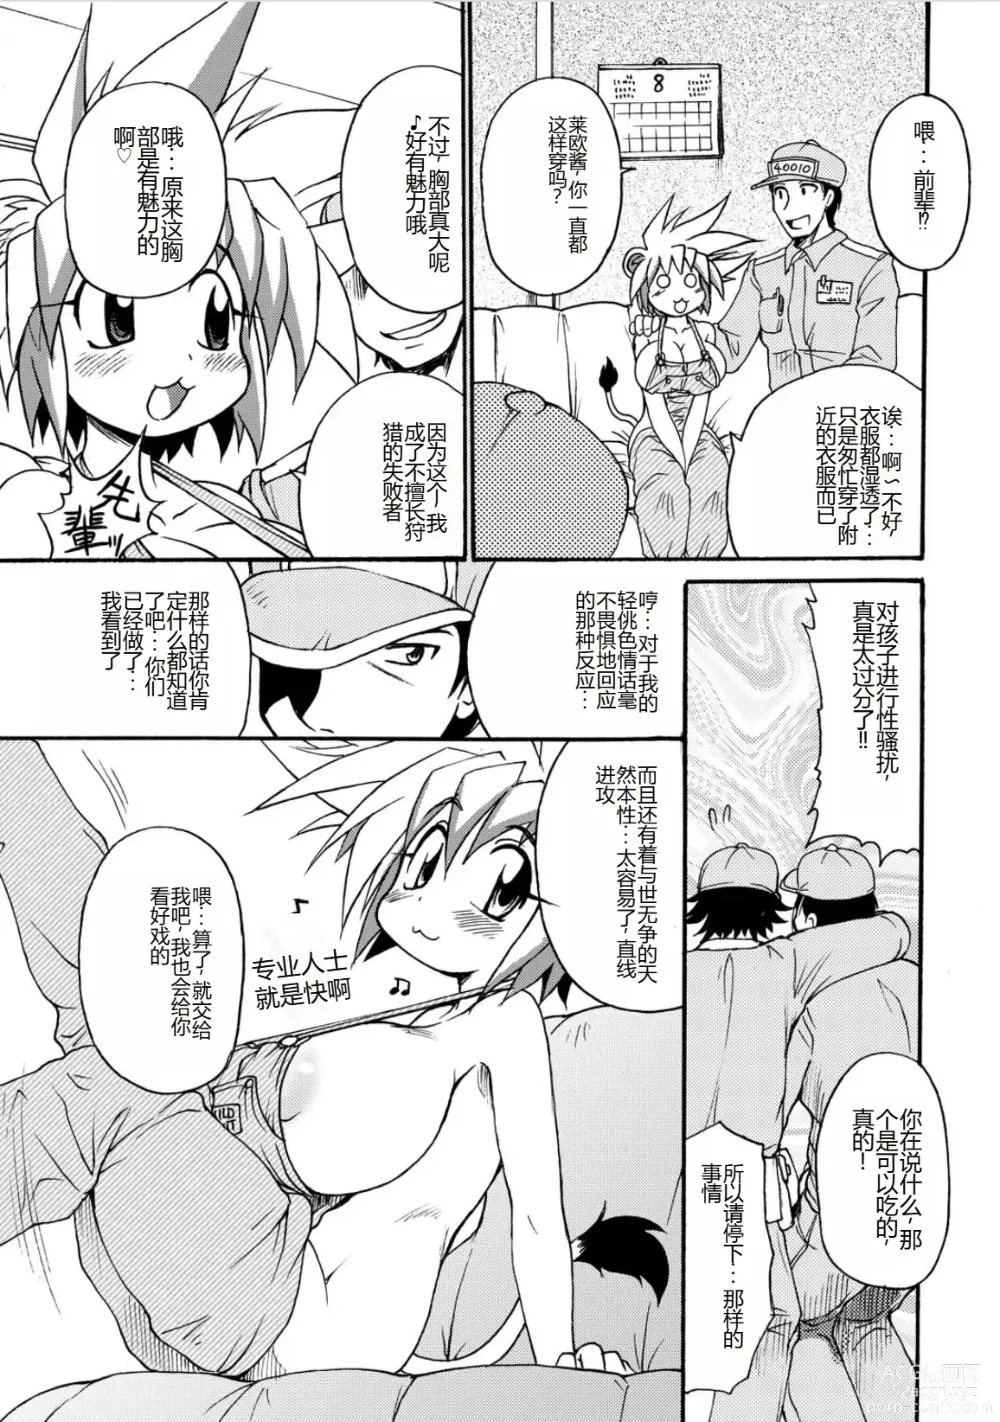 Page 6 of manga Lion Heart